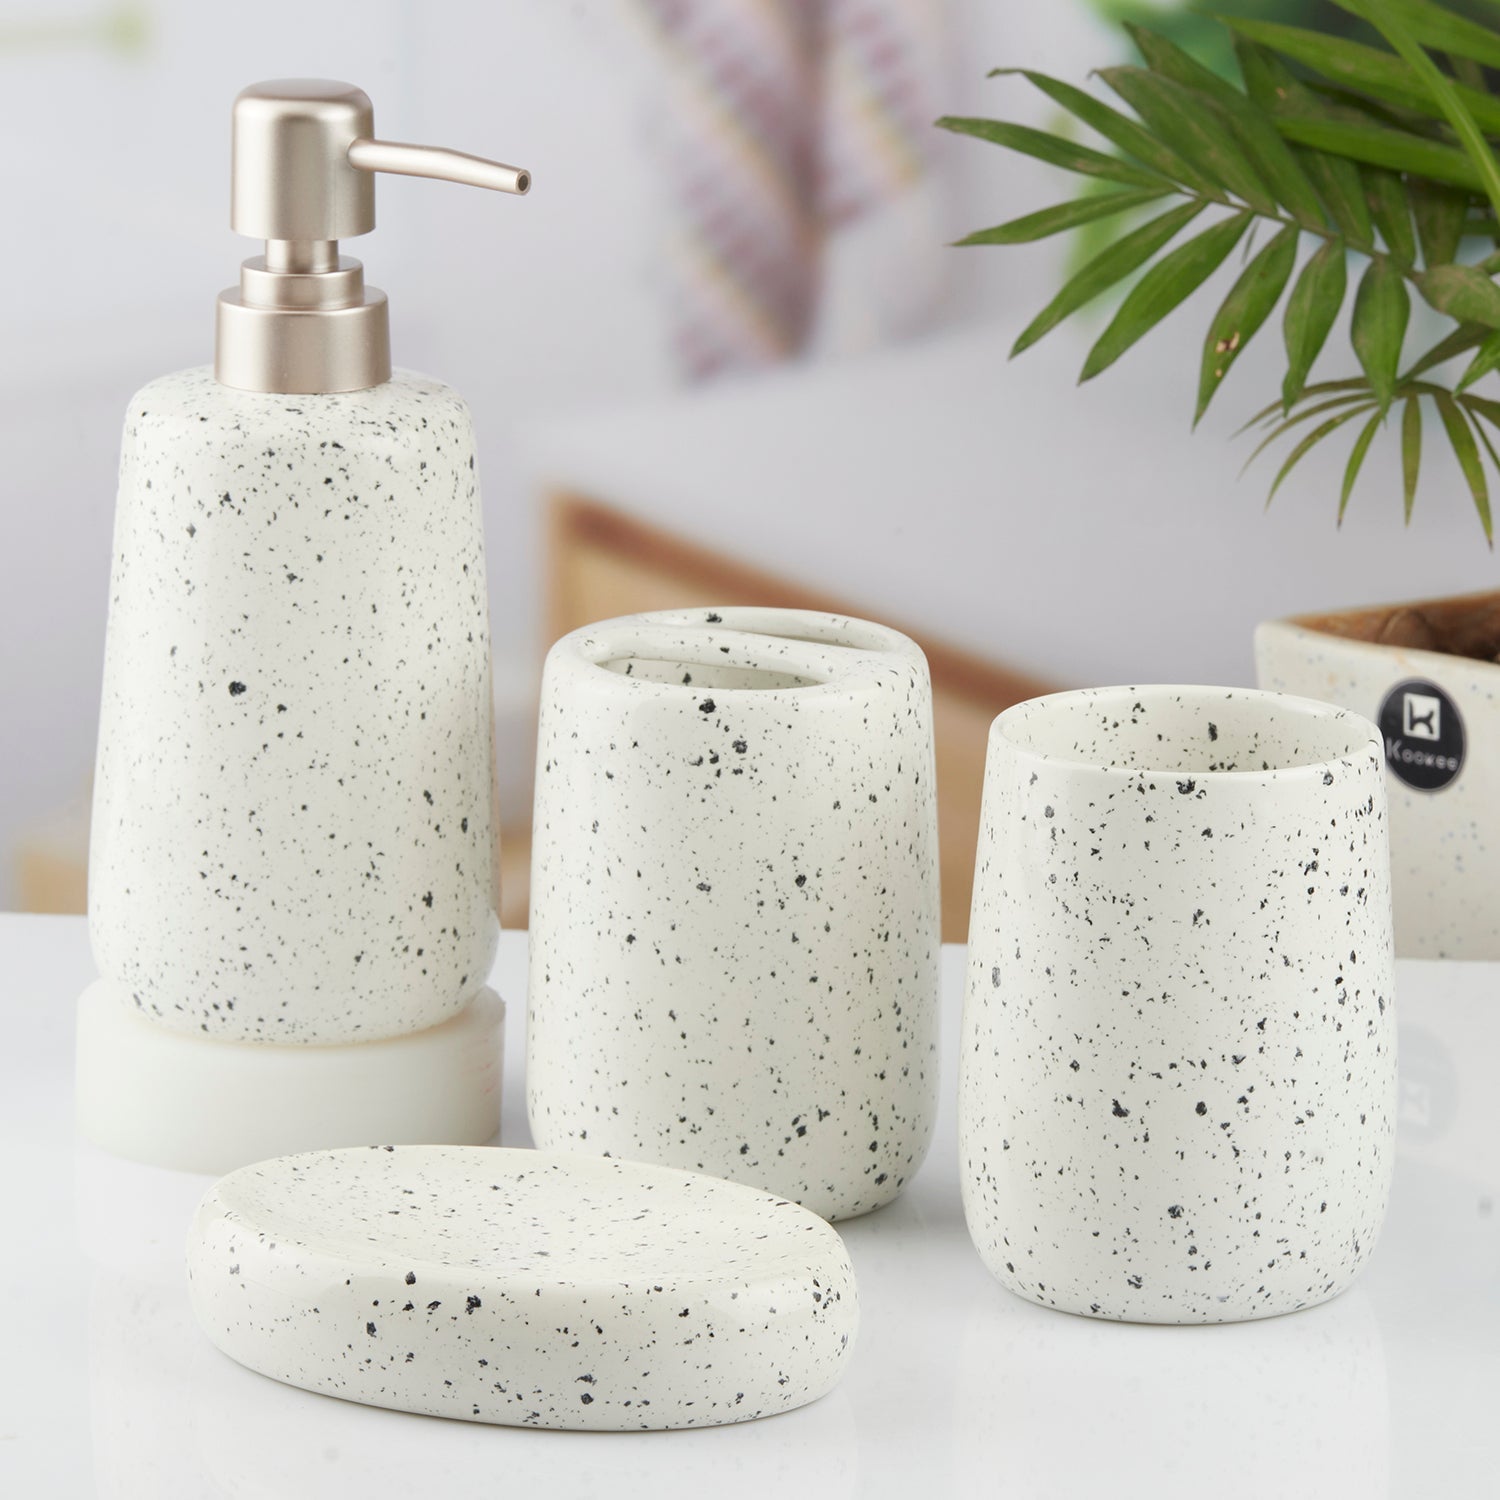 Ceramic Bathroom Set of 4 with Soap Dispenser (10428)